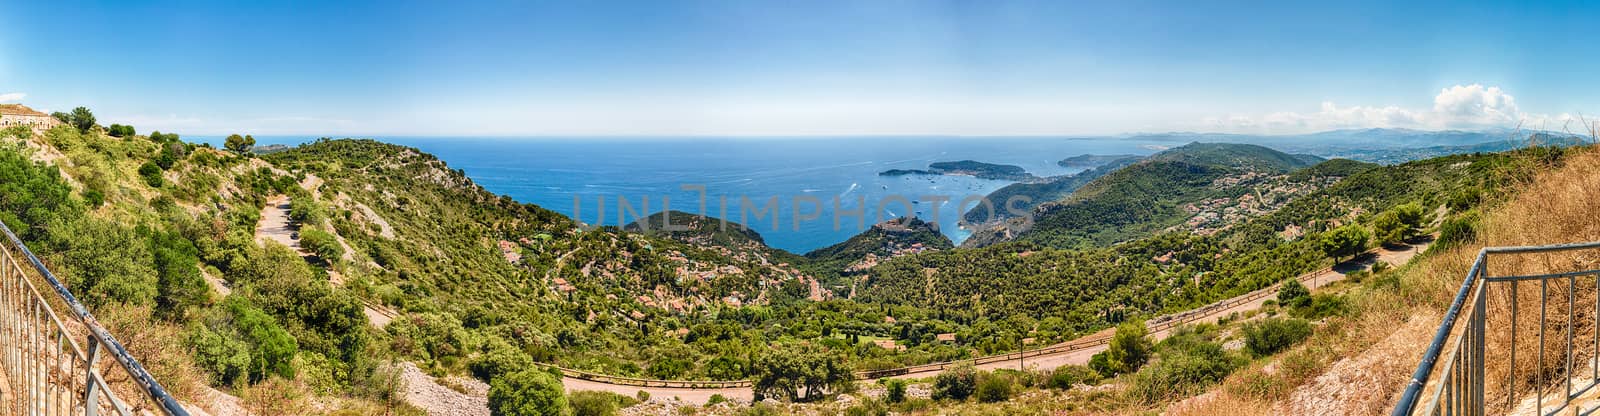 Scenic landscape view over the French Riviera coastline, as seen from Fort de la Revere, near the village of Èze, Cote d'Azur, France